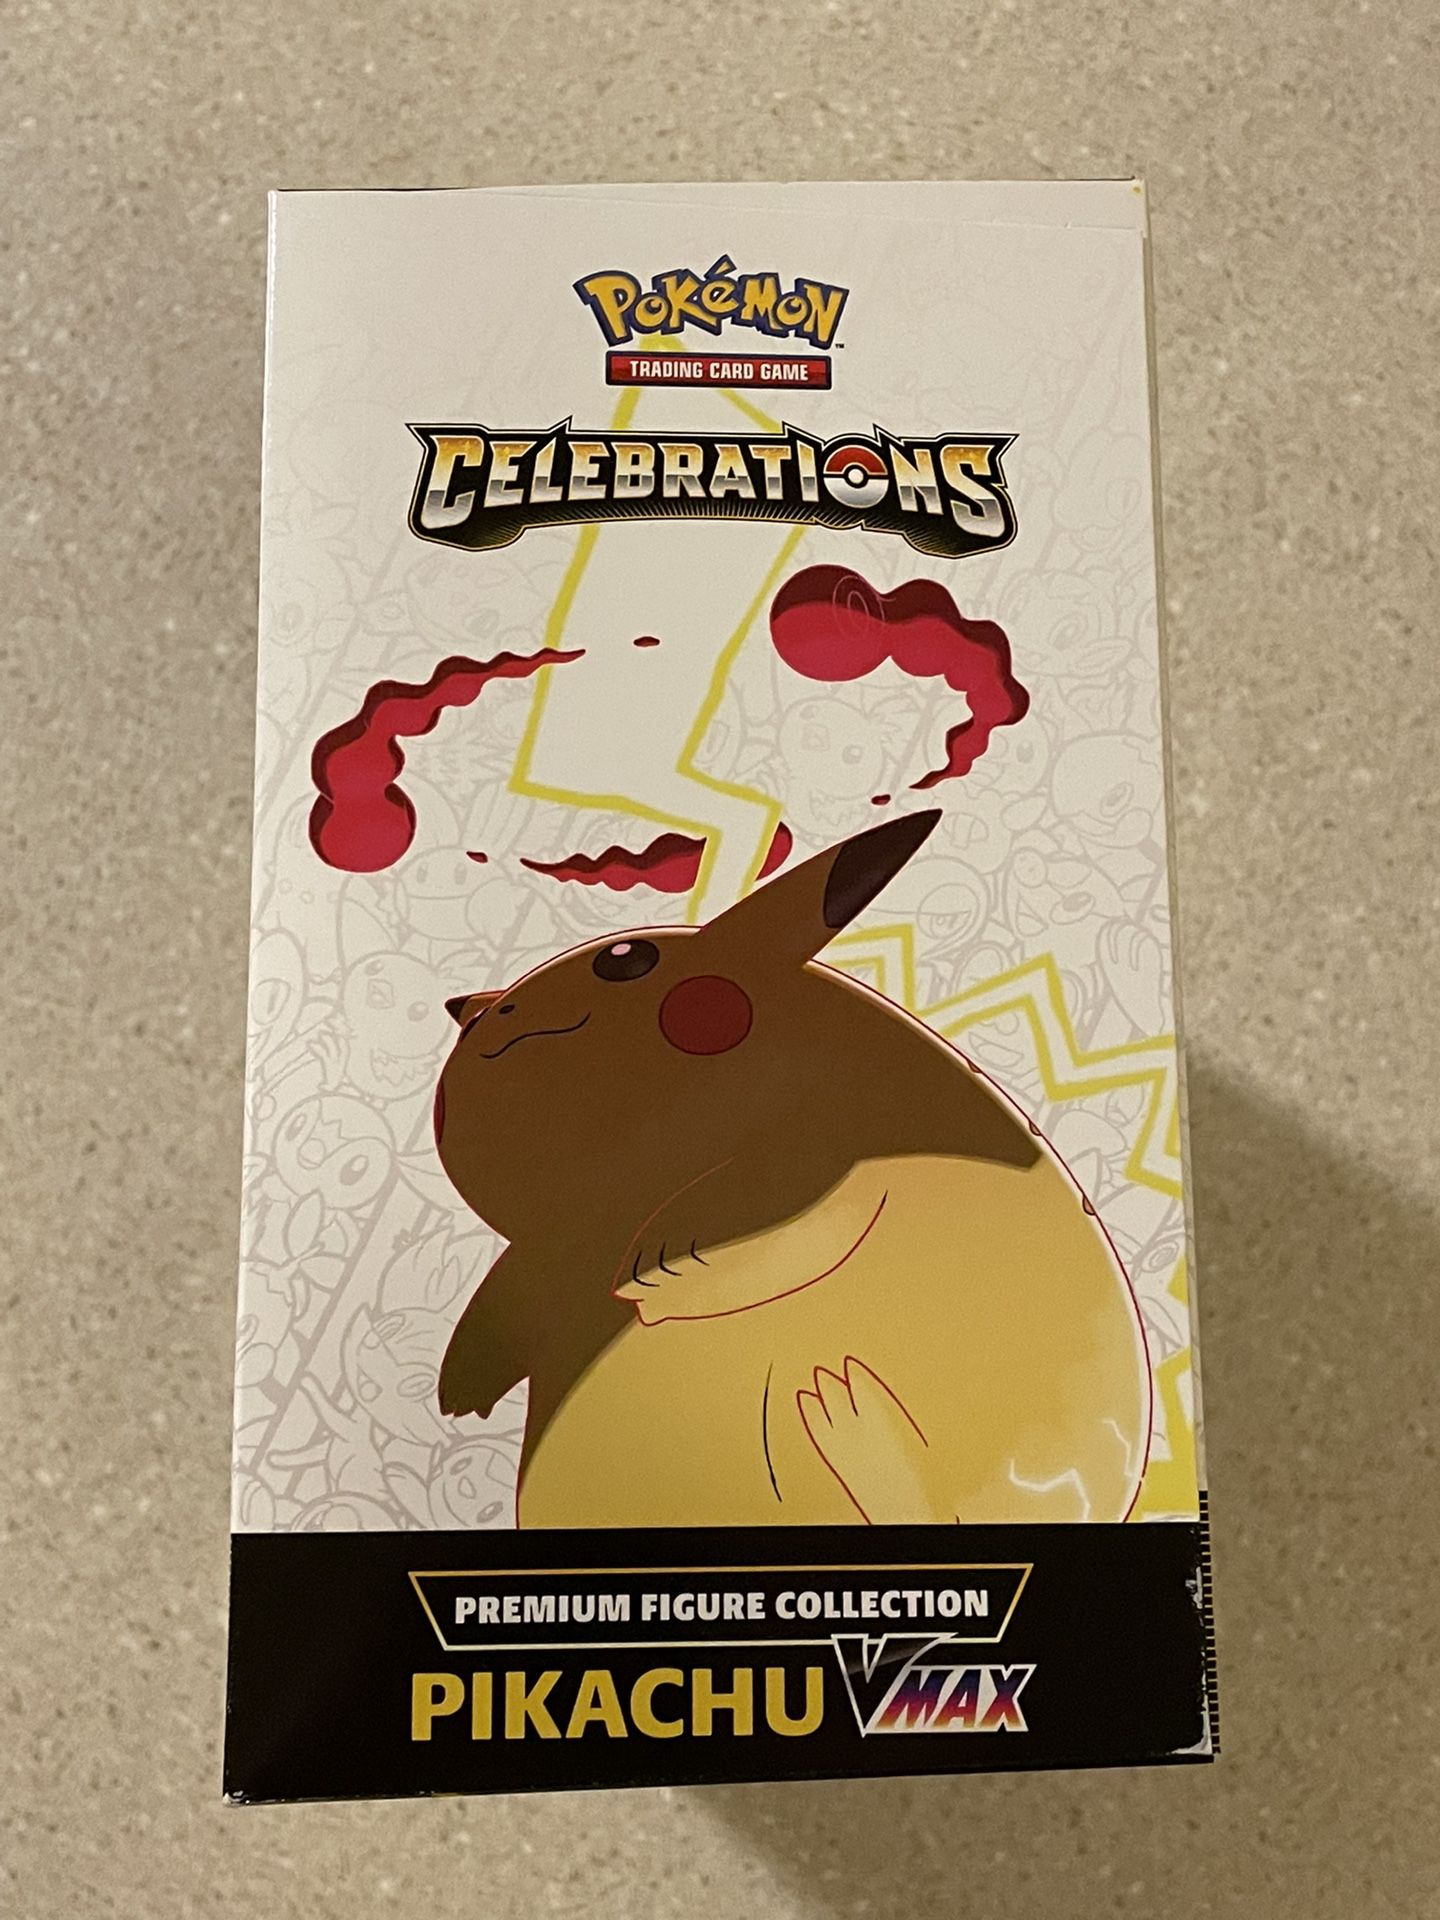 Pokémon 25th Anniversary Celebrations Pikachu VMAX Premium Figure Collection Box